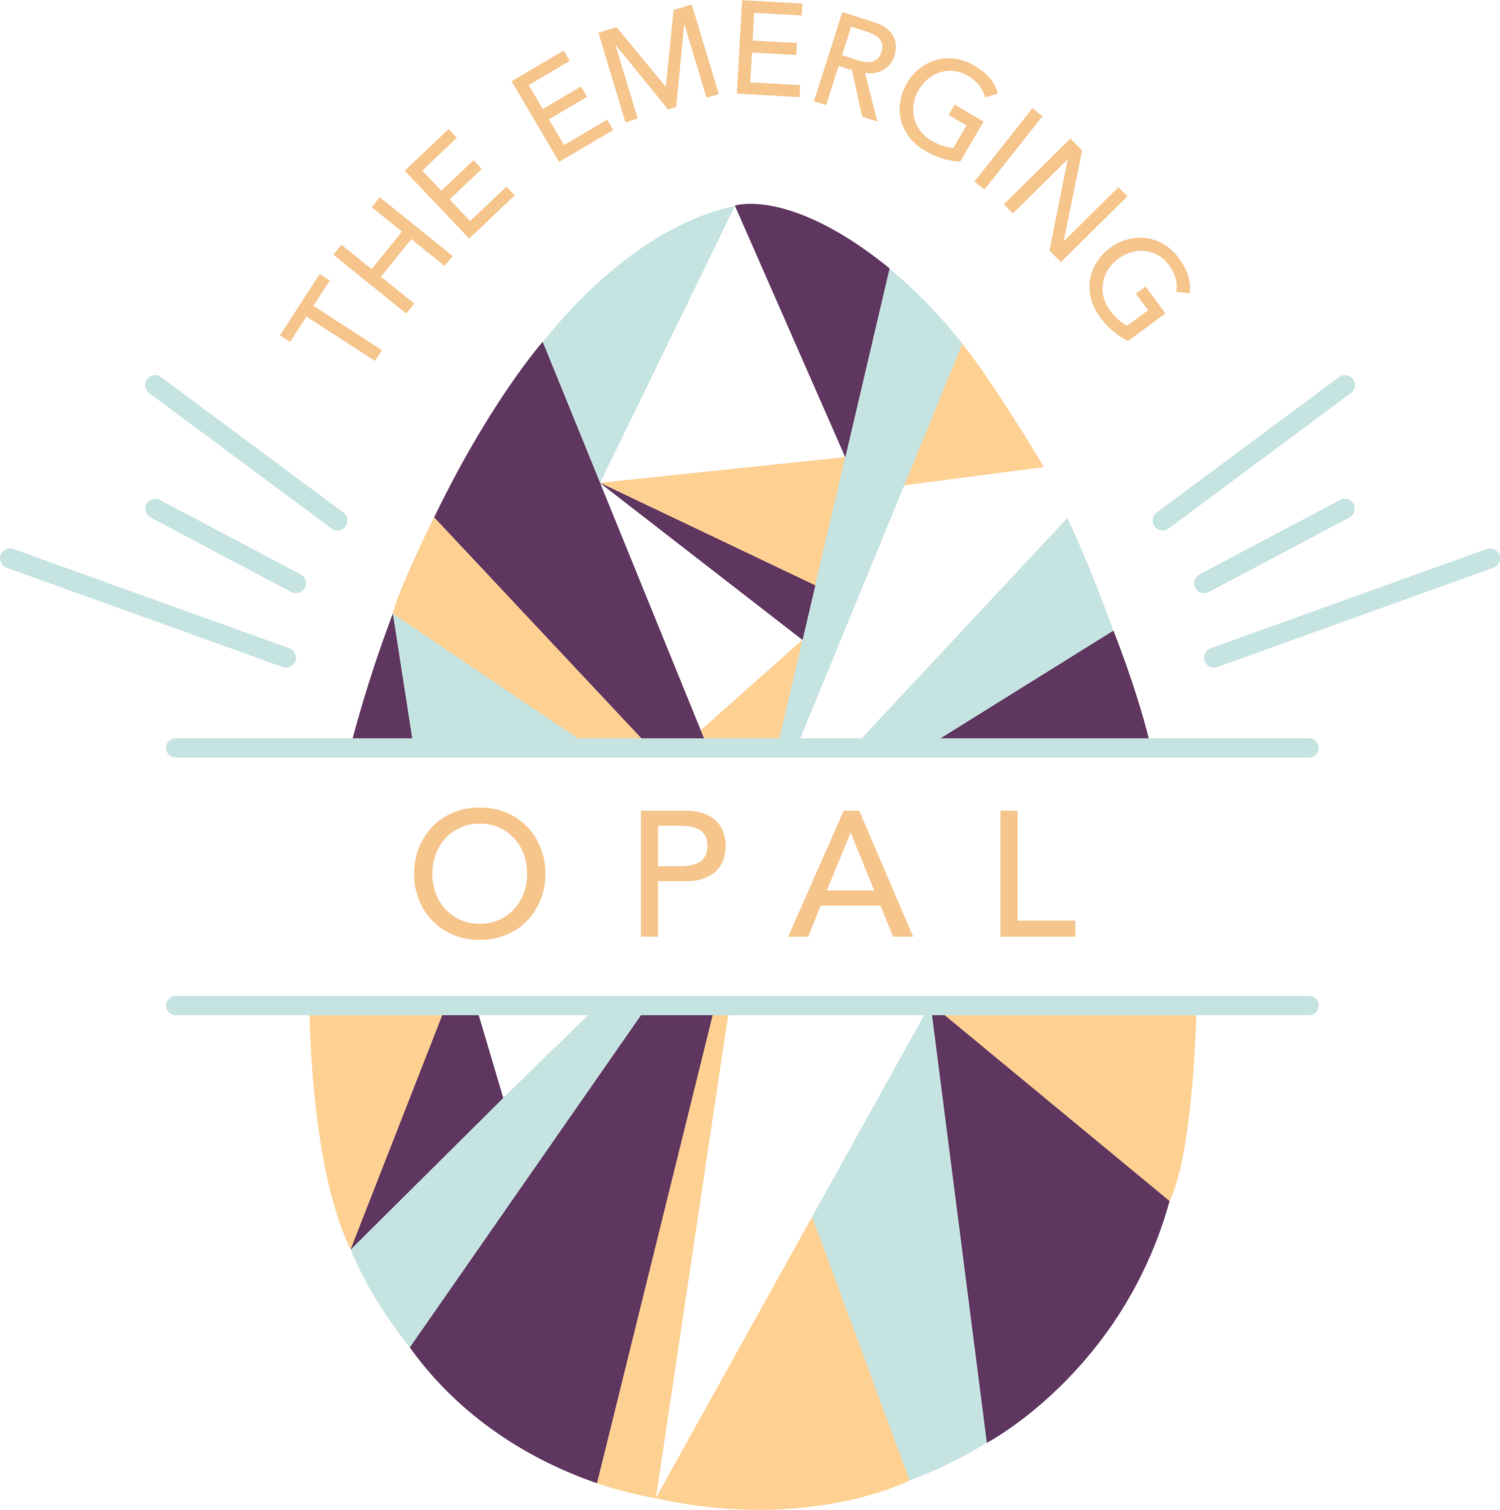 THE EMERGING OPAL